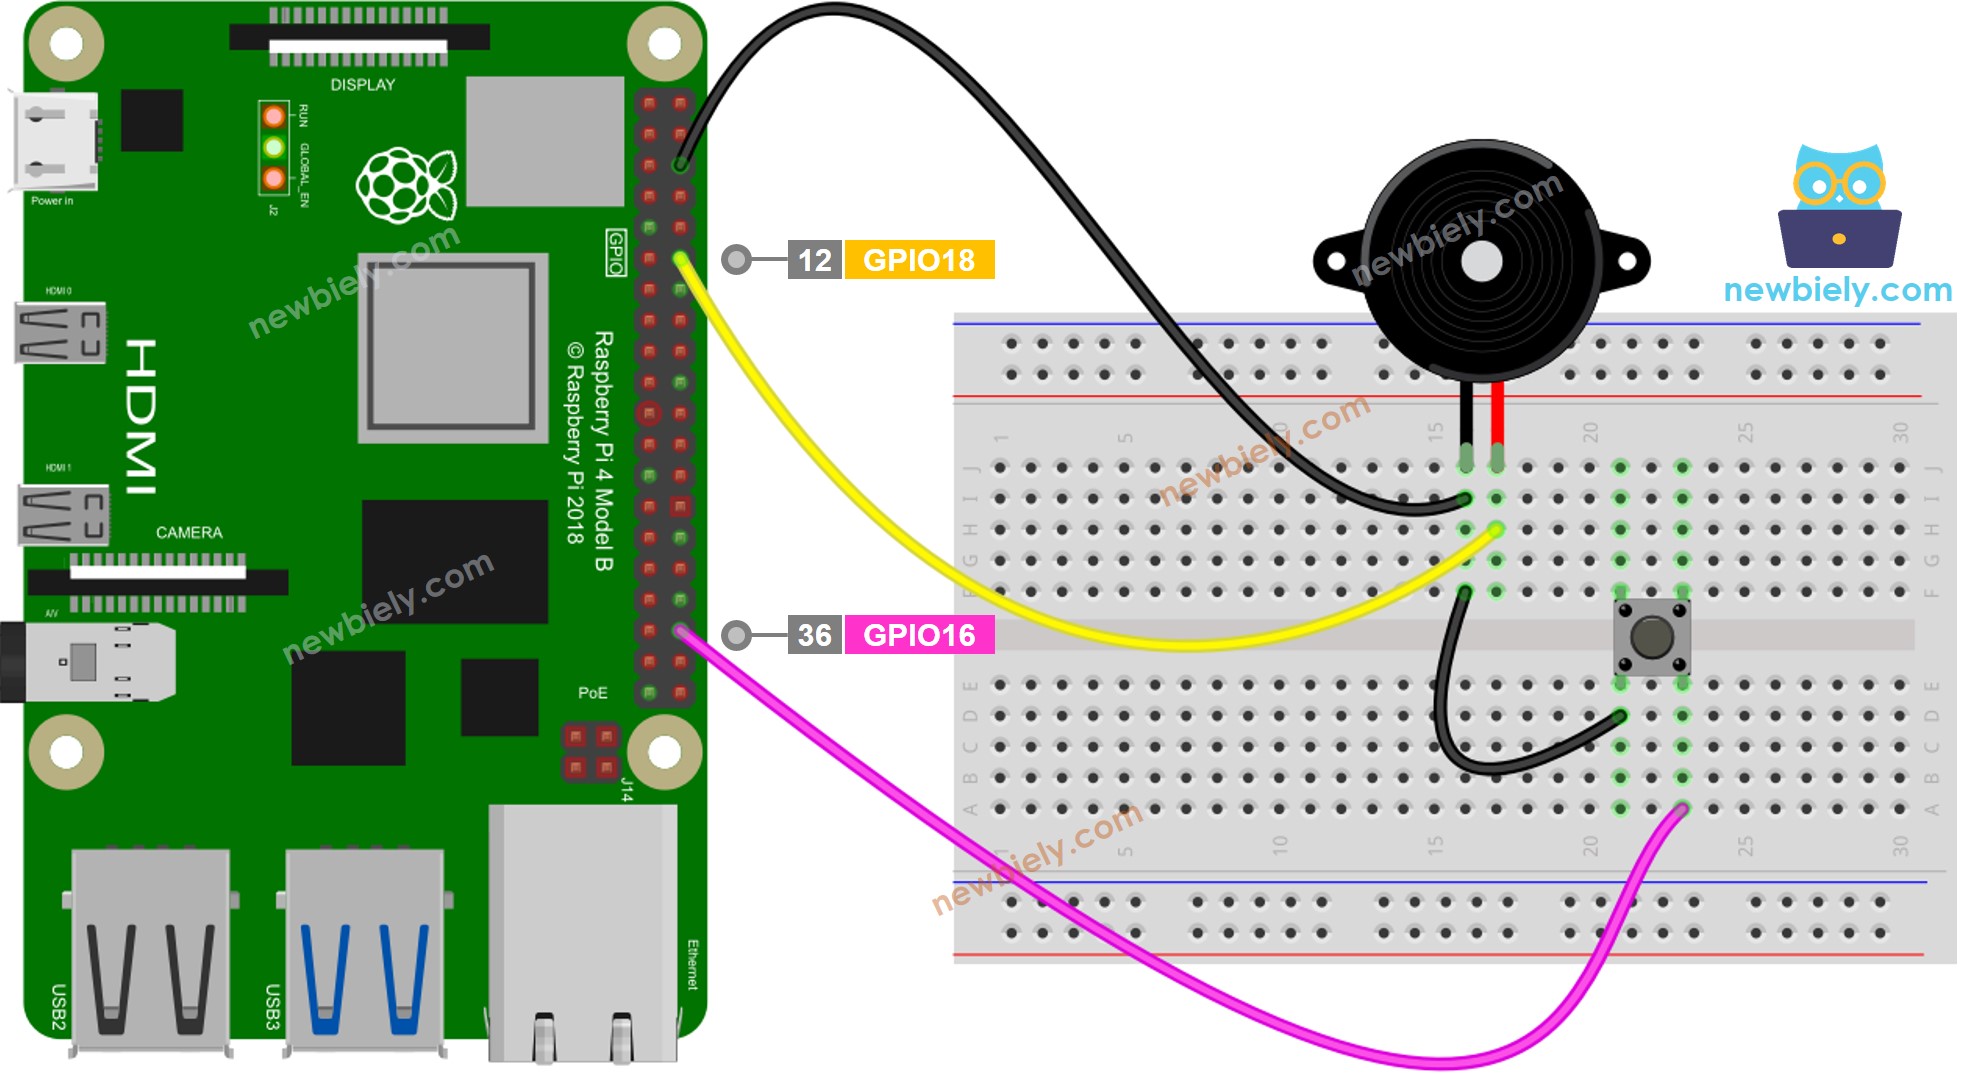 The wiring diagram between Raspberry Pi and Button Piezo Buzzer